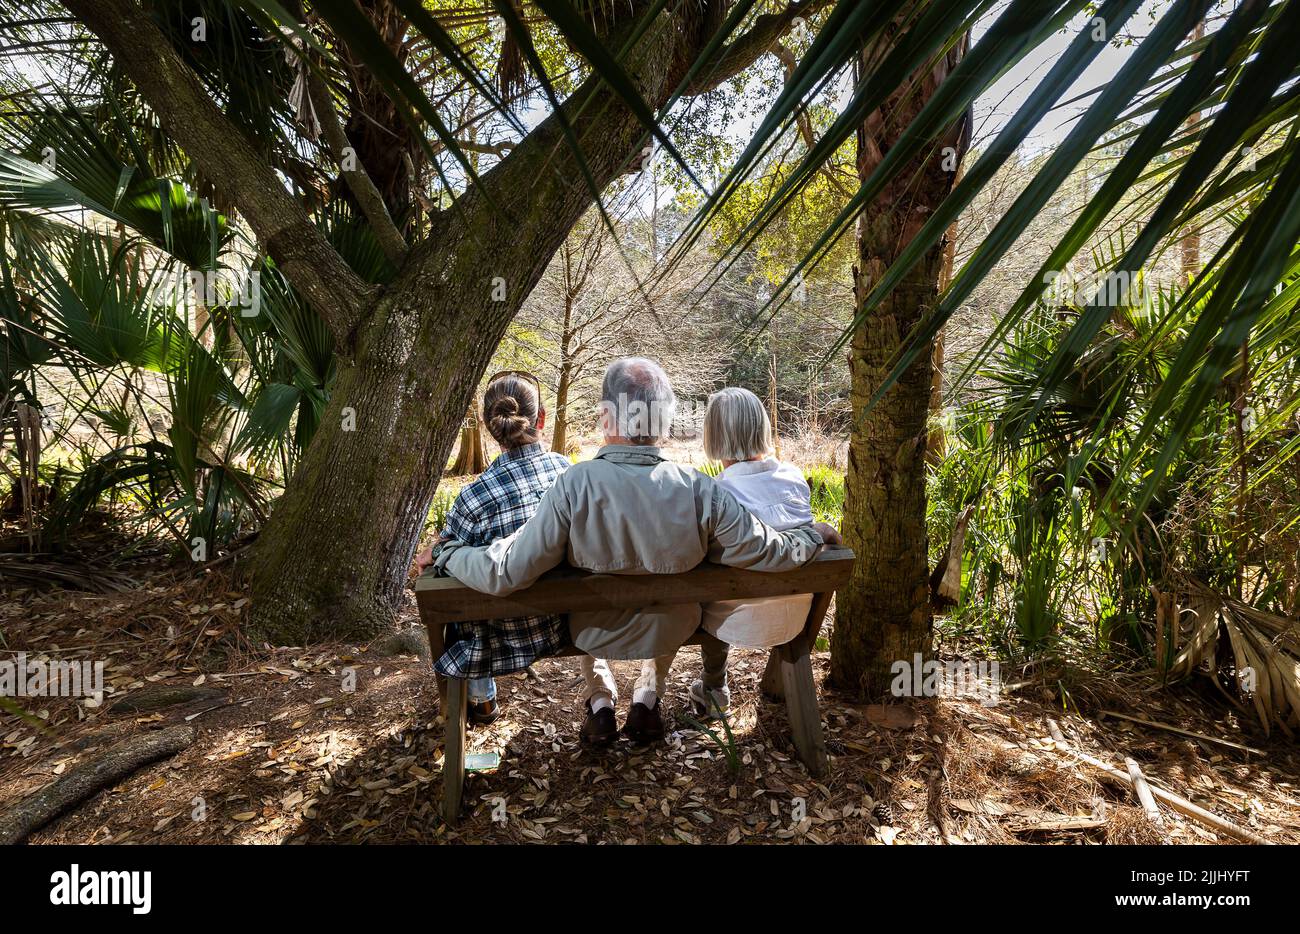 Famiglia a Cypress palude su Dewees Island, S.C. Foto Stock